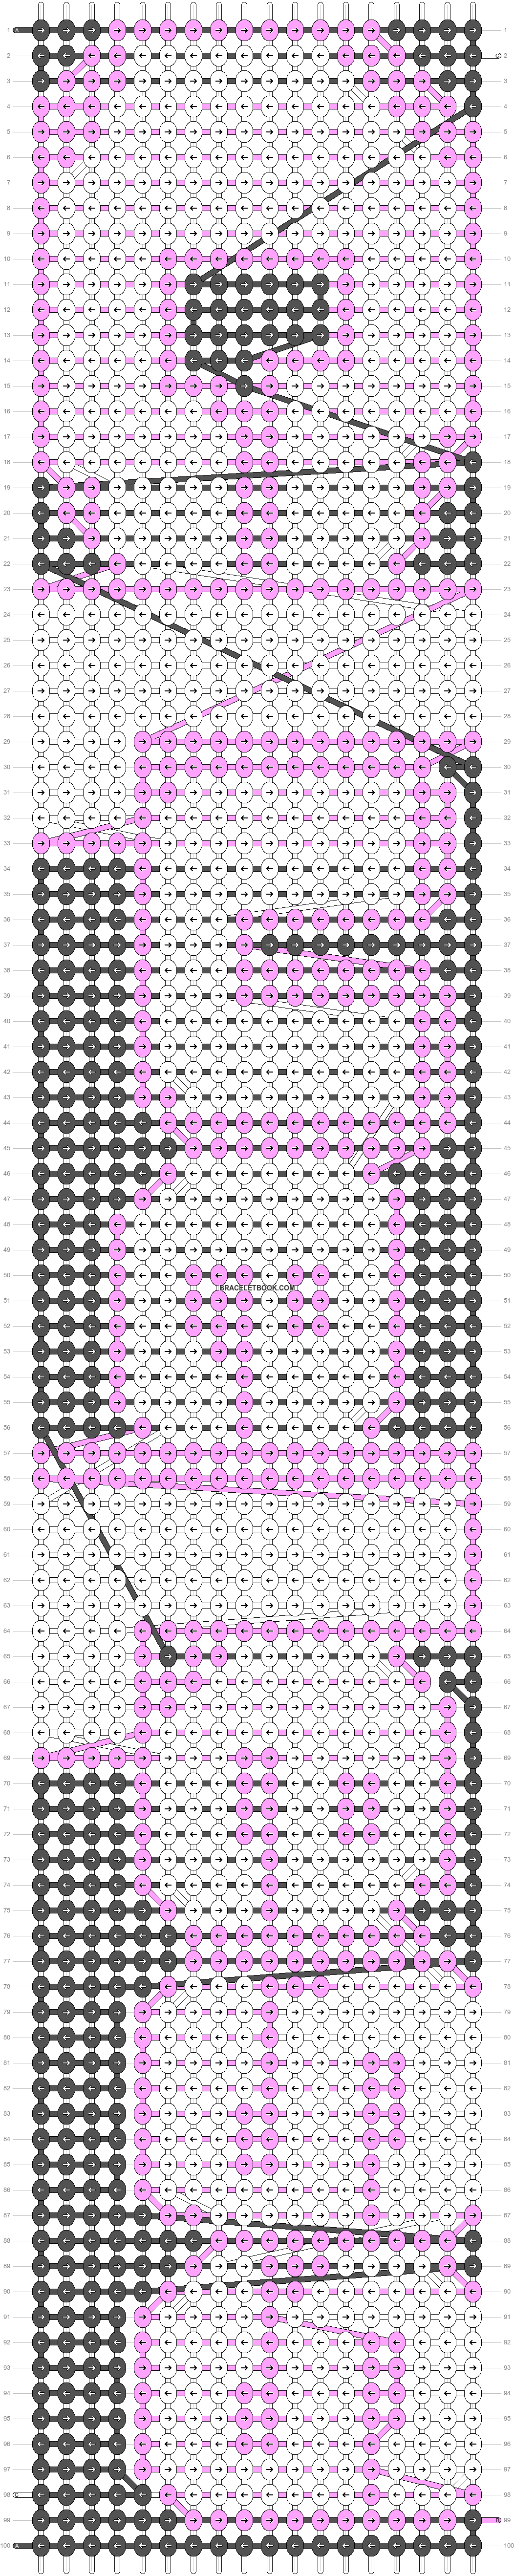 Alpha pattern #39554 variation #49540 pattern